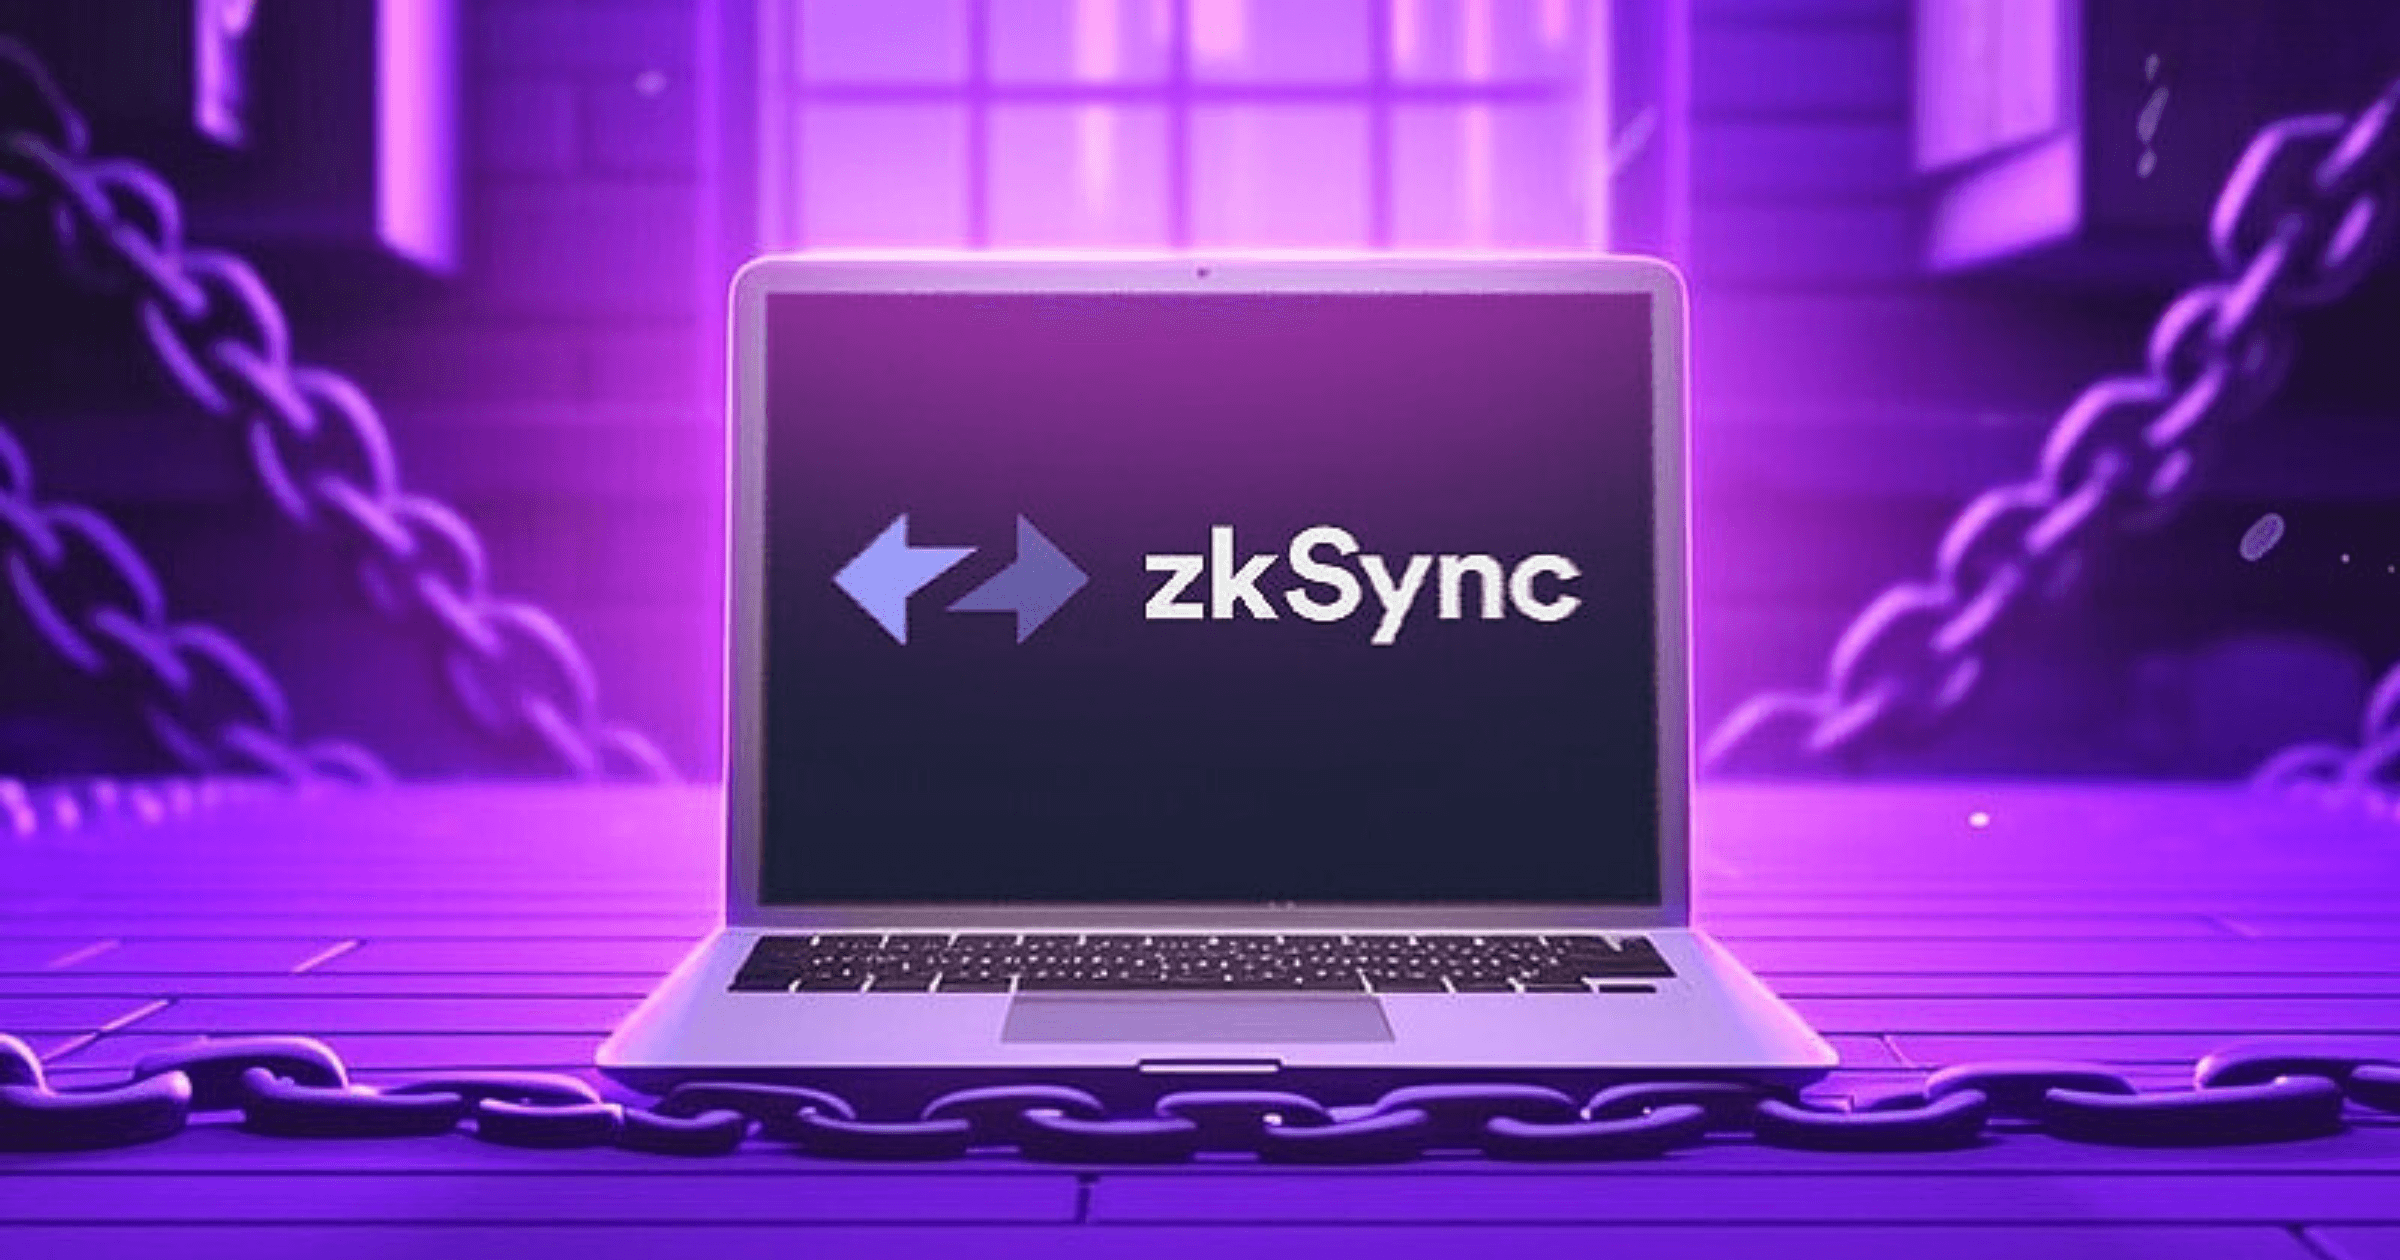 zkSync 即將空投！zkSync 是什麼？3 分鐘快速了解項目優勢、潛力